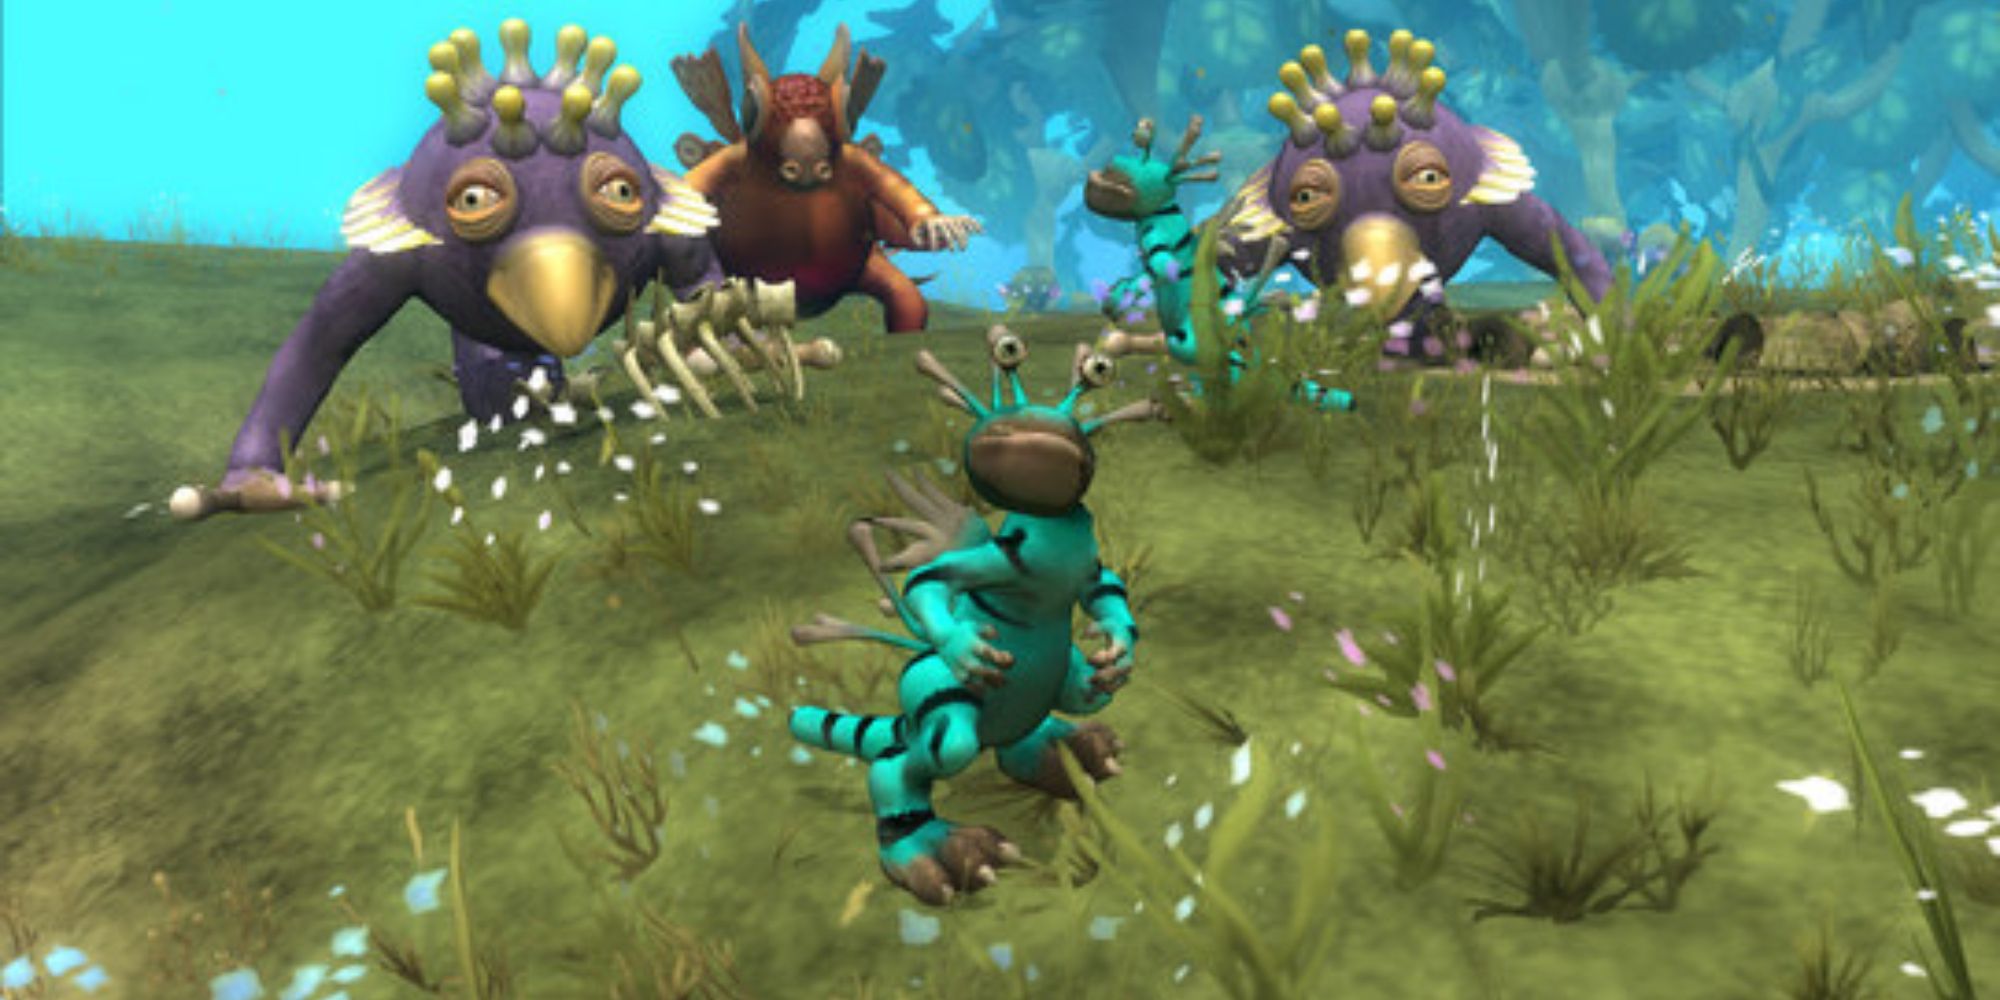 A screenshot showcasing gameplay from Spore.